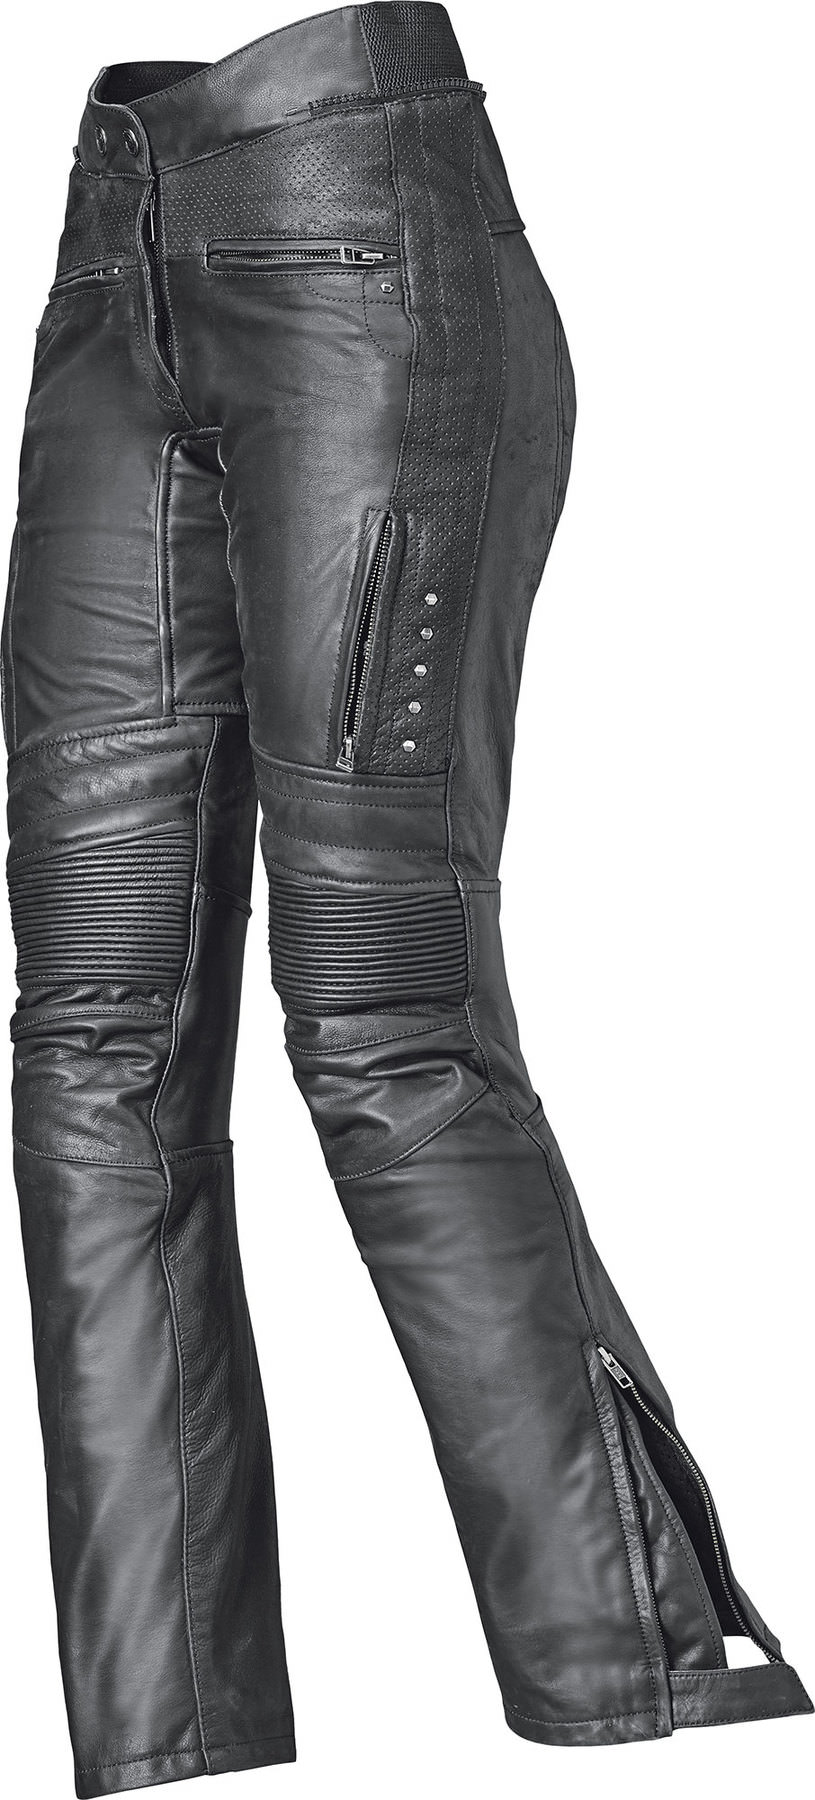 ladies leather pants